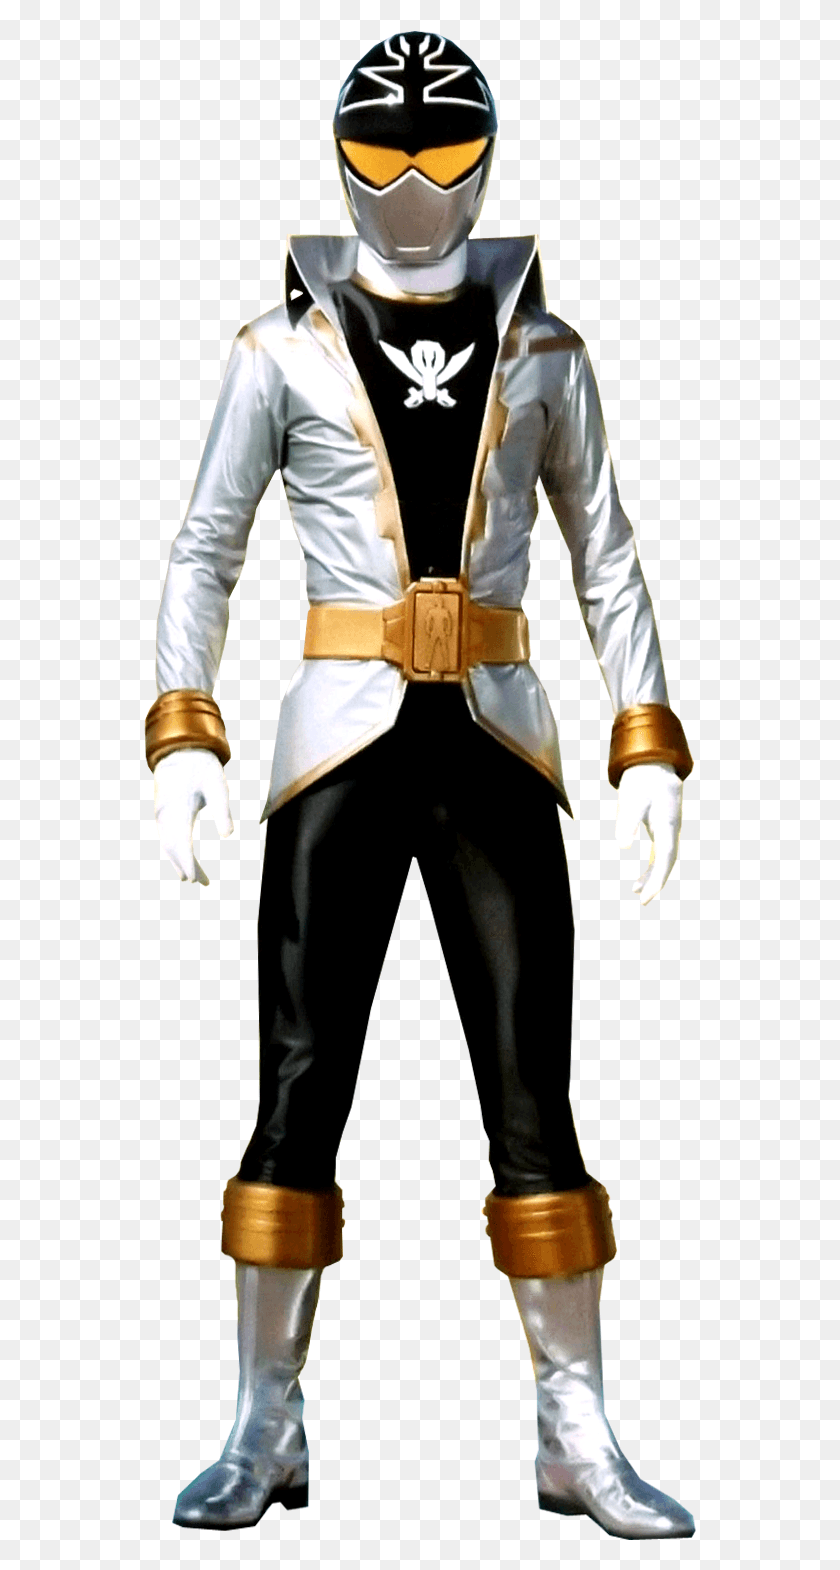 Power Ranger Images Silver Ranger обои Power Rangers Megaforce Silver, одежда, одежда, человек HD PNG скачать